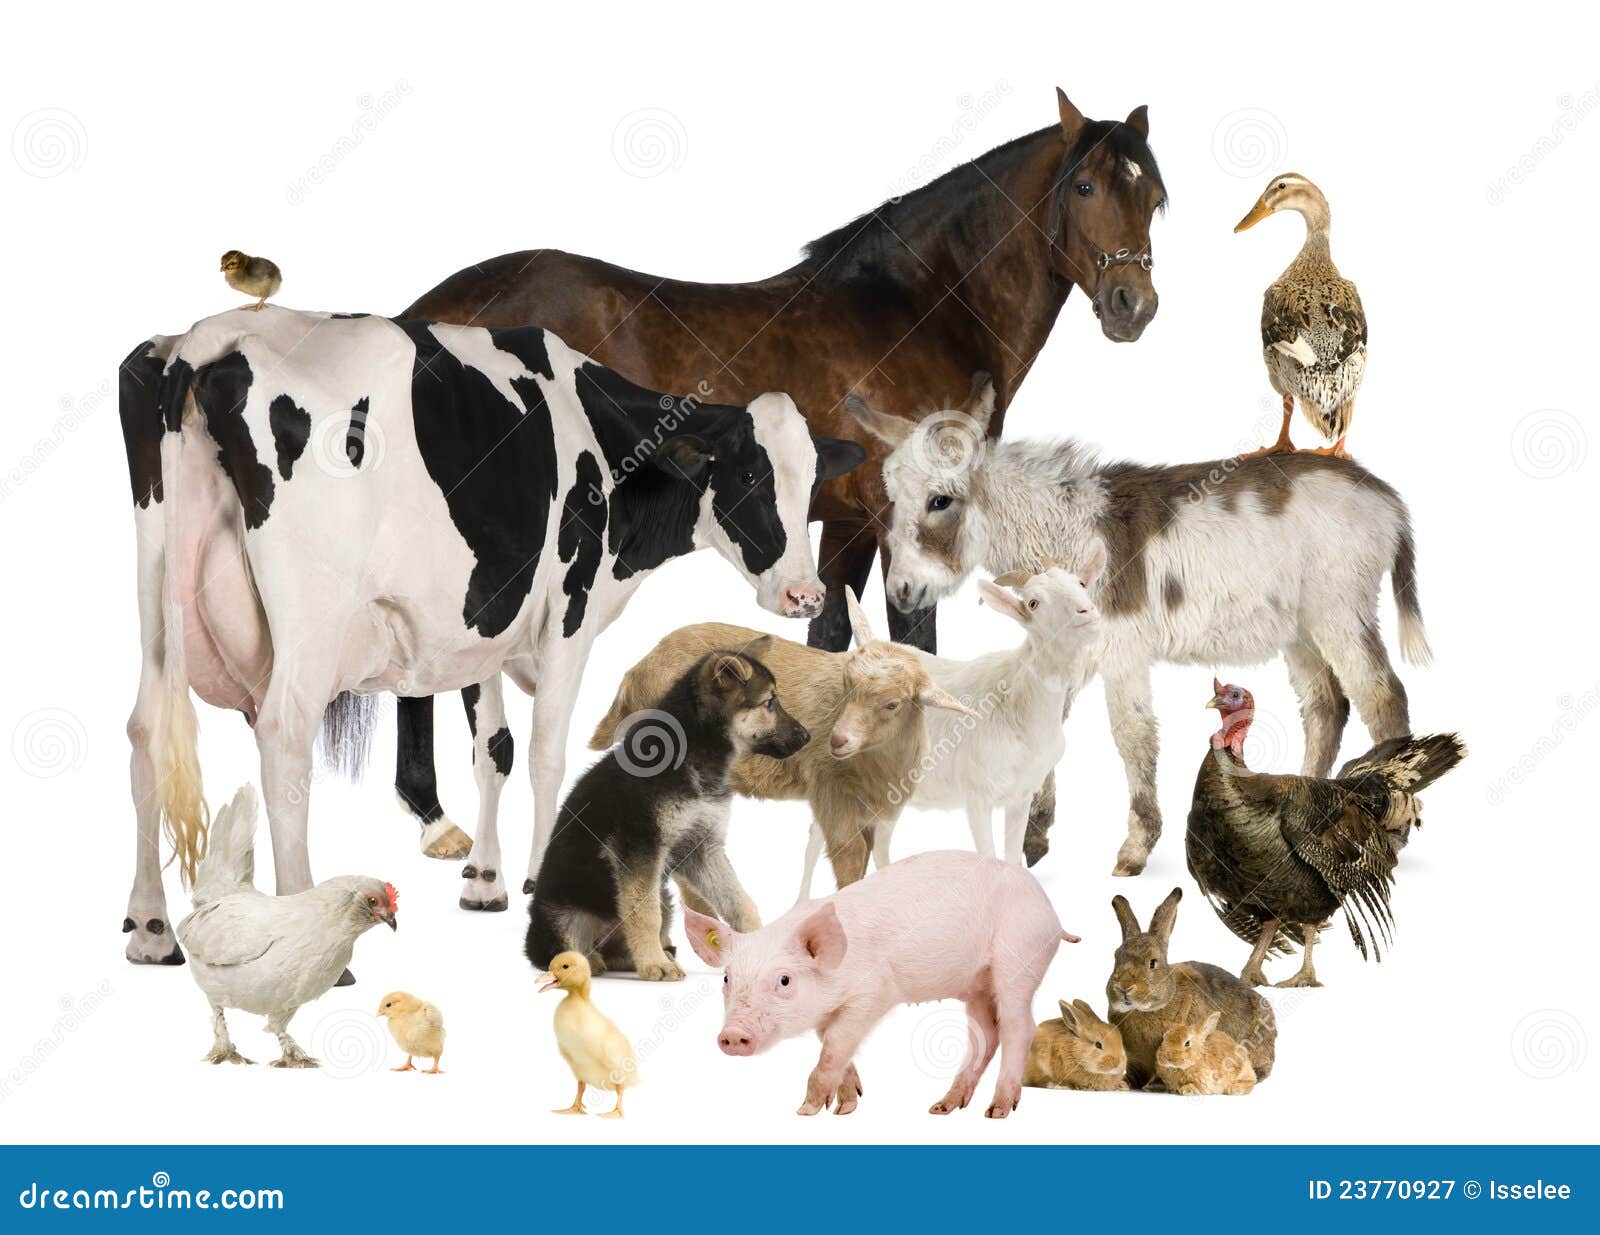 217,111 Farm Animals Stock Photos - Free & Royalty-Free Stock Photos from  Dreamstime